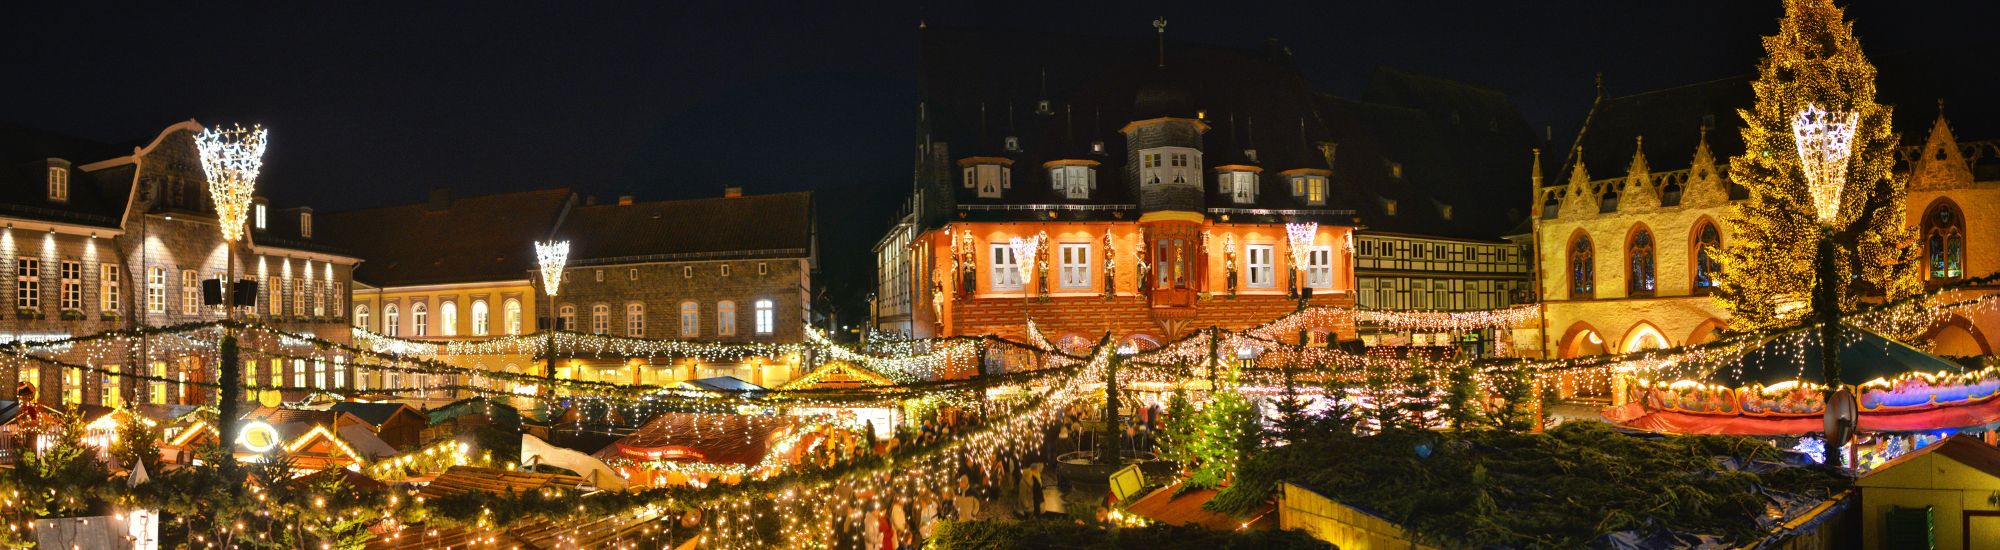 tourhub | Just Go Holidays | Birmingham Christmas Market & World's Biggest Primark 